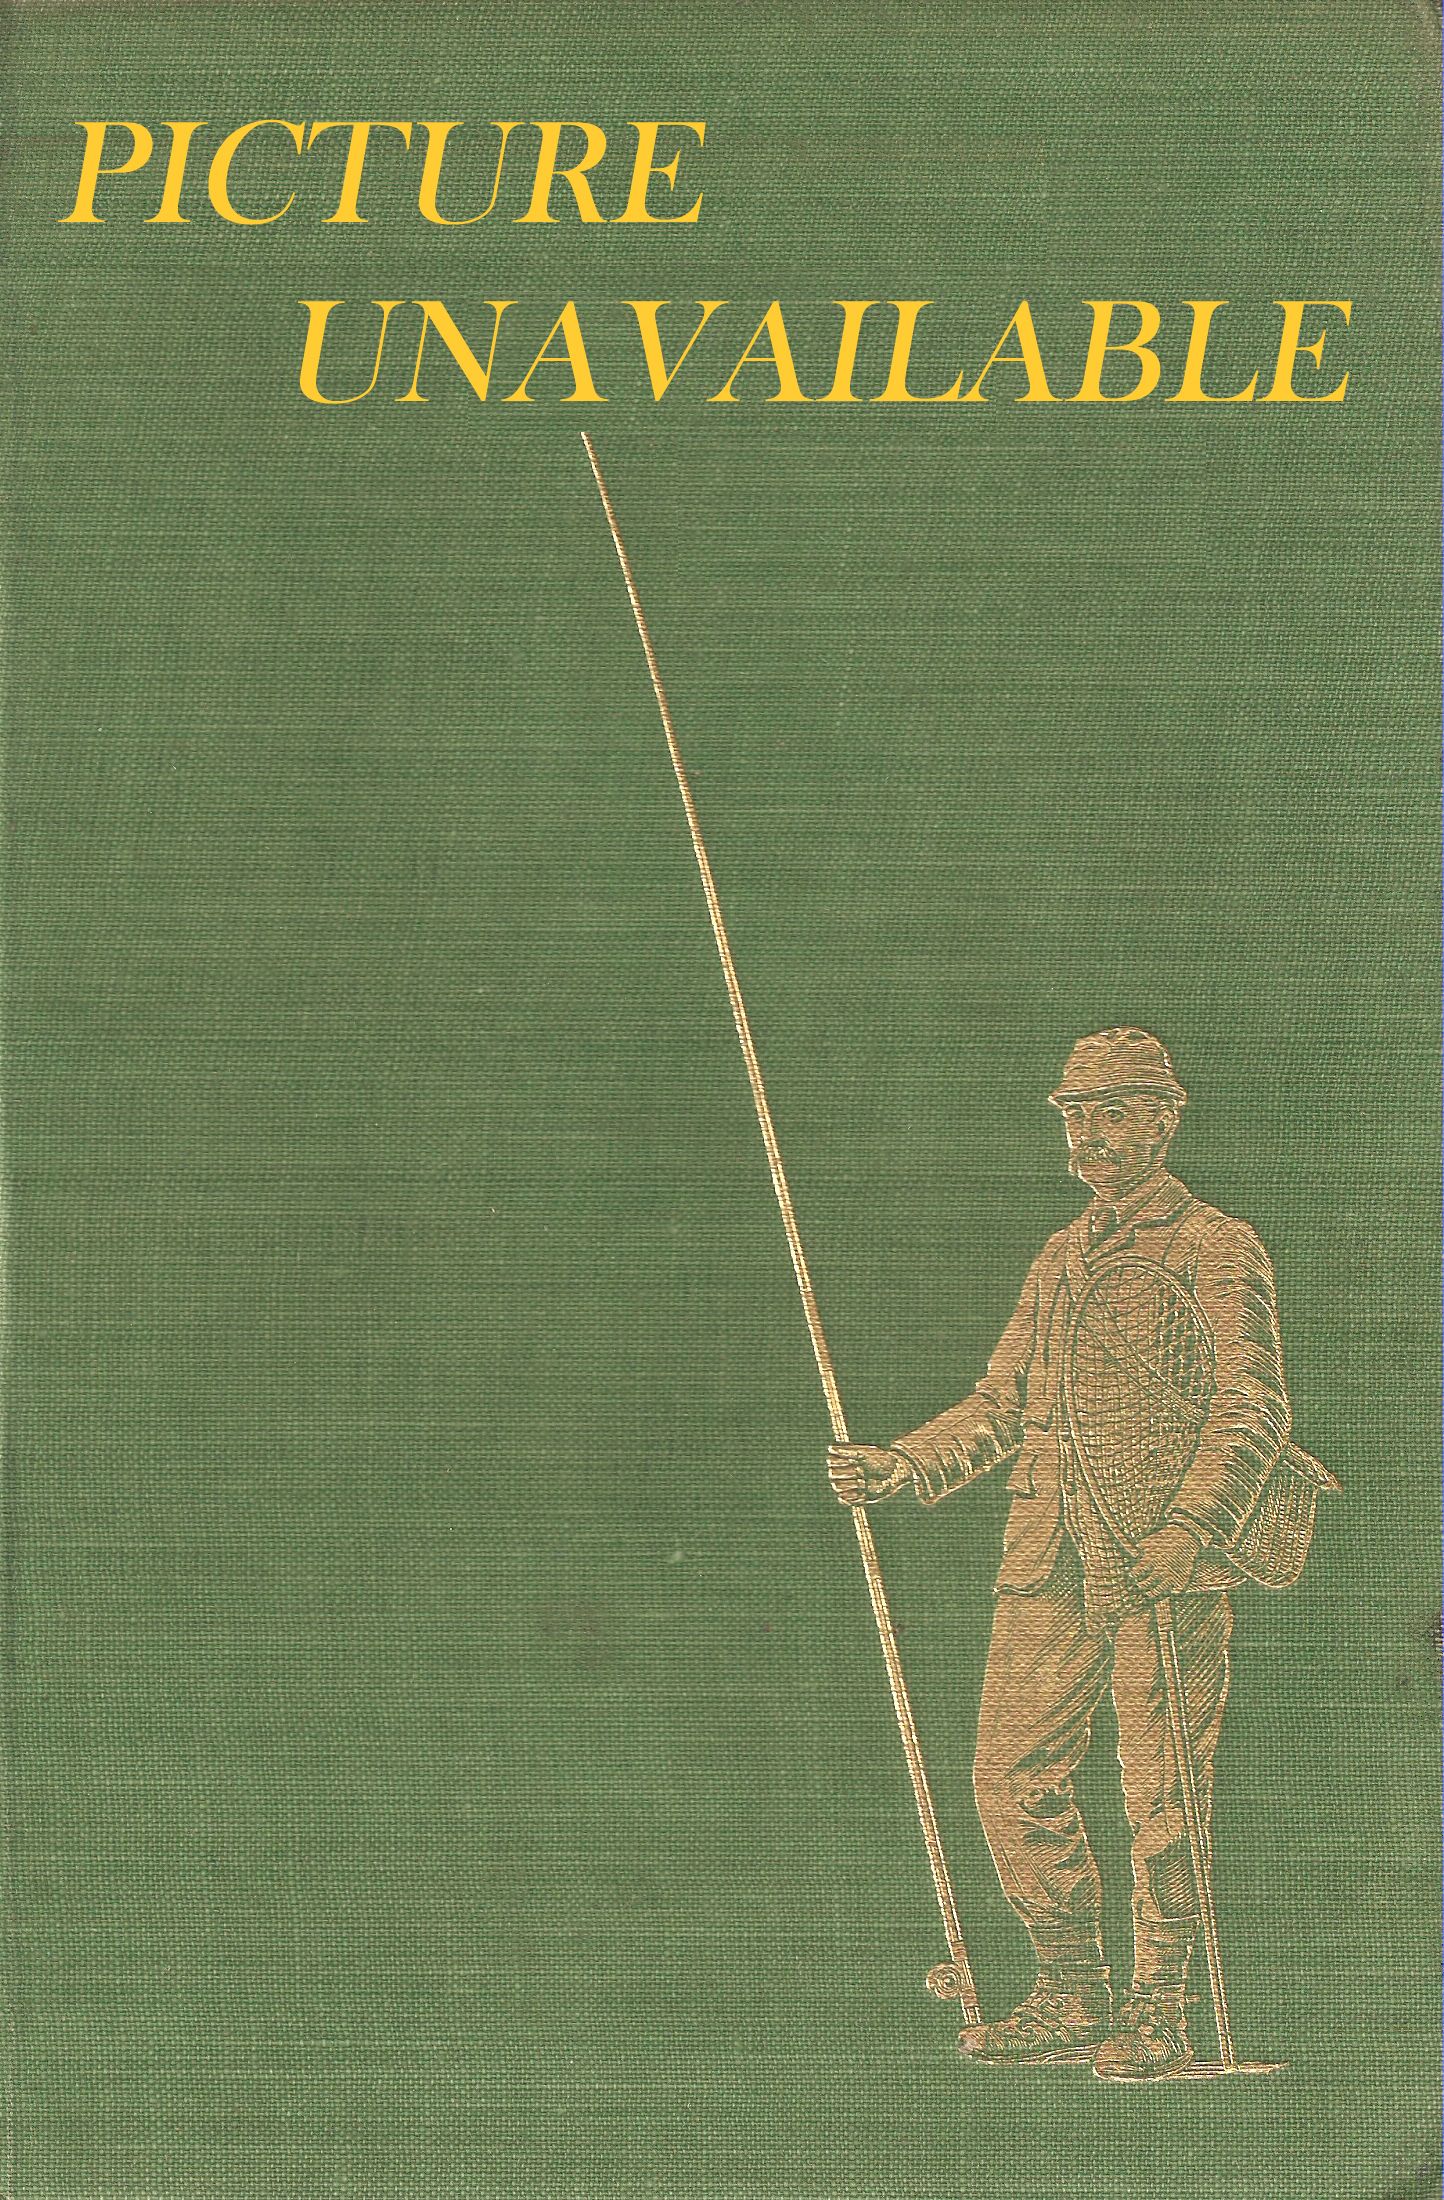 CREEL: A FISHING MAGAZINE. Volume 2, number 8. February 1965.